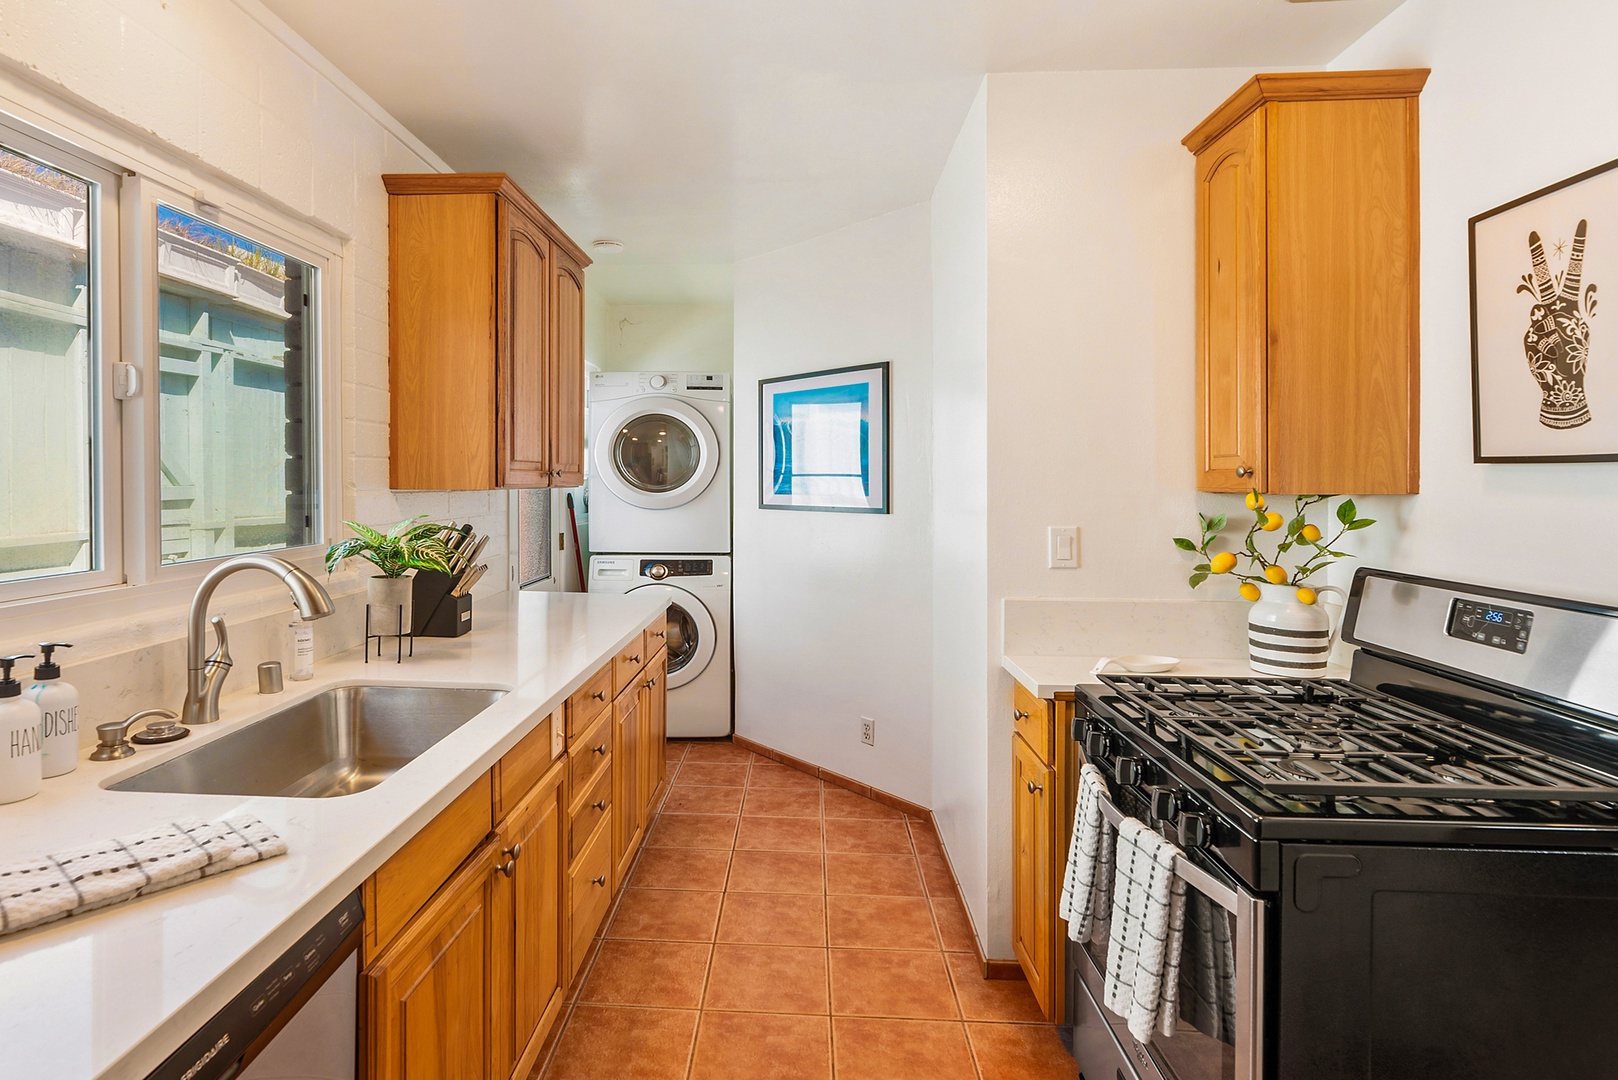 La Jolla Vacation Rentals, Hemingway's Beach House - Washer and Dryer in the kitchen corner